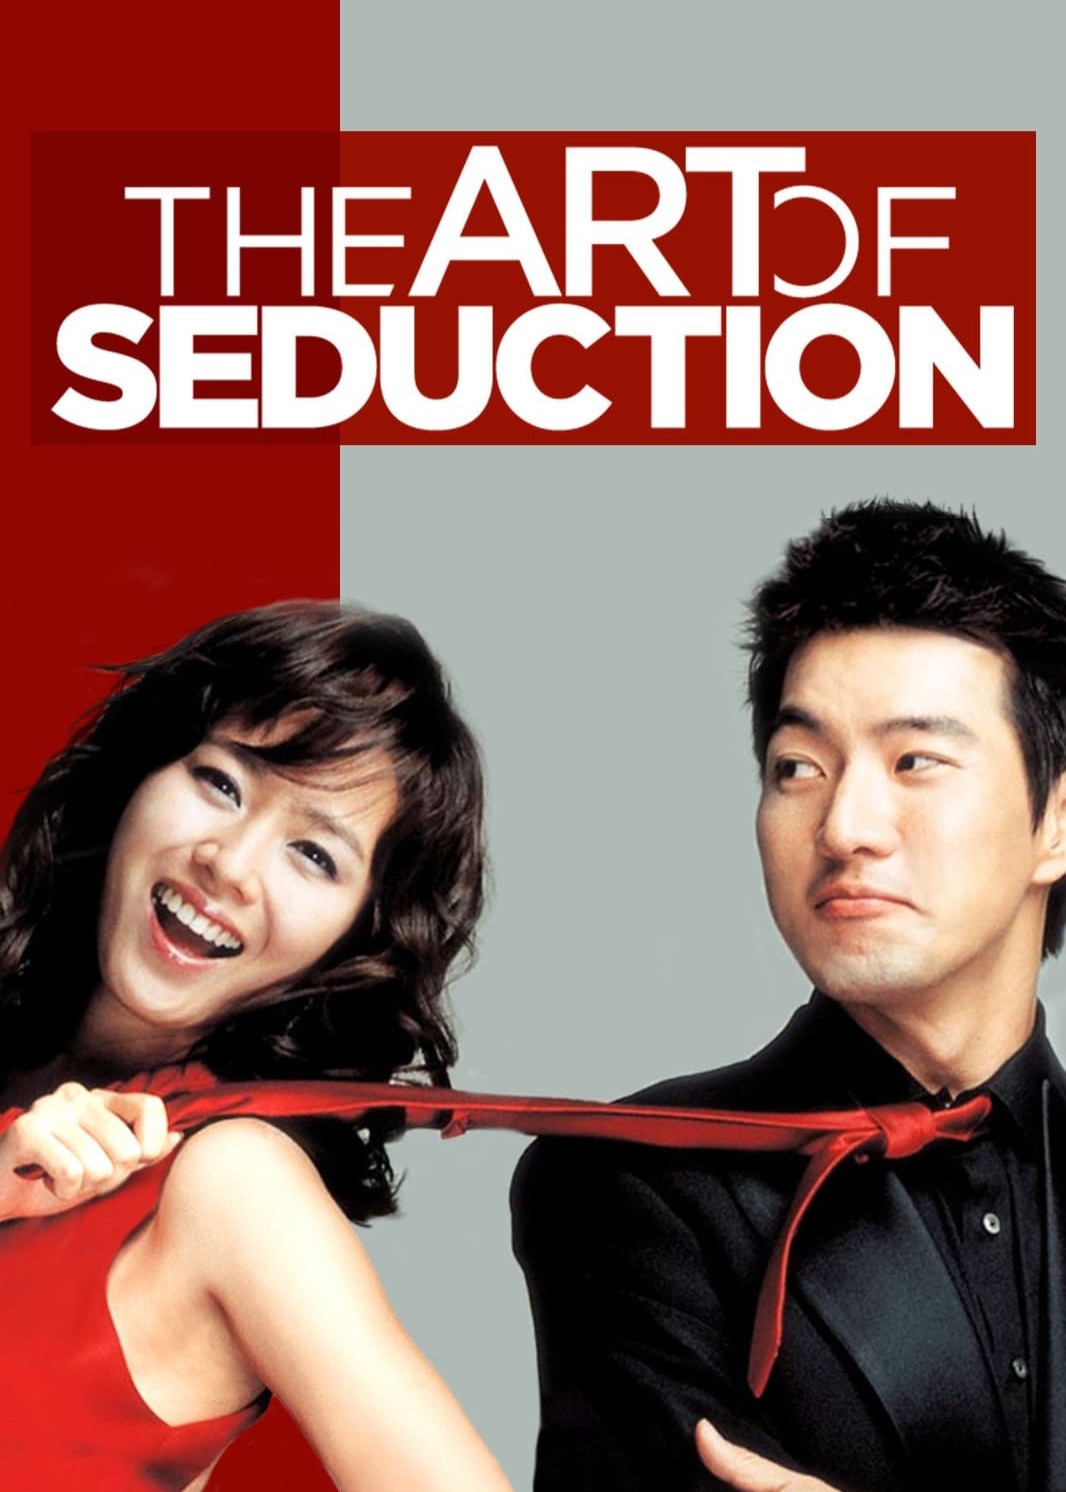 Art of Seduction 2005